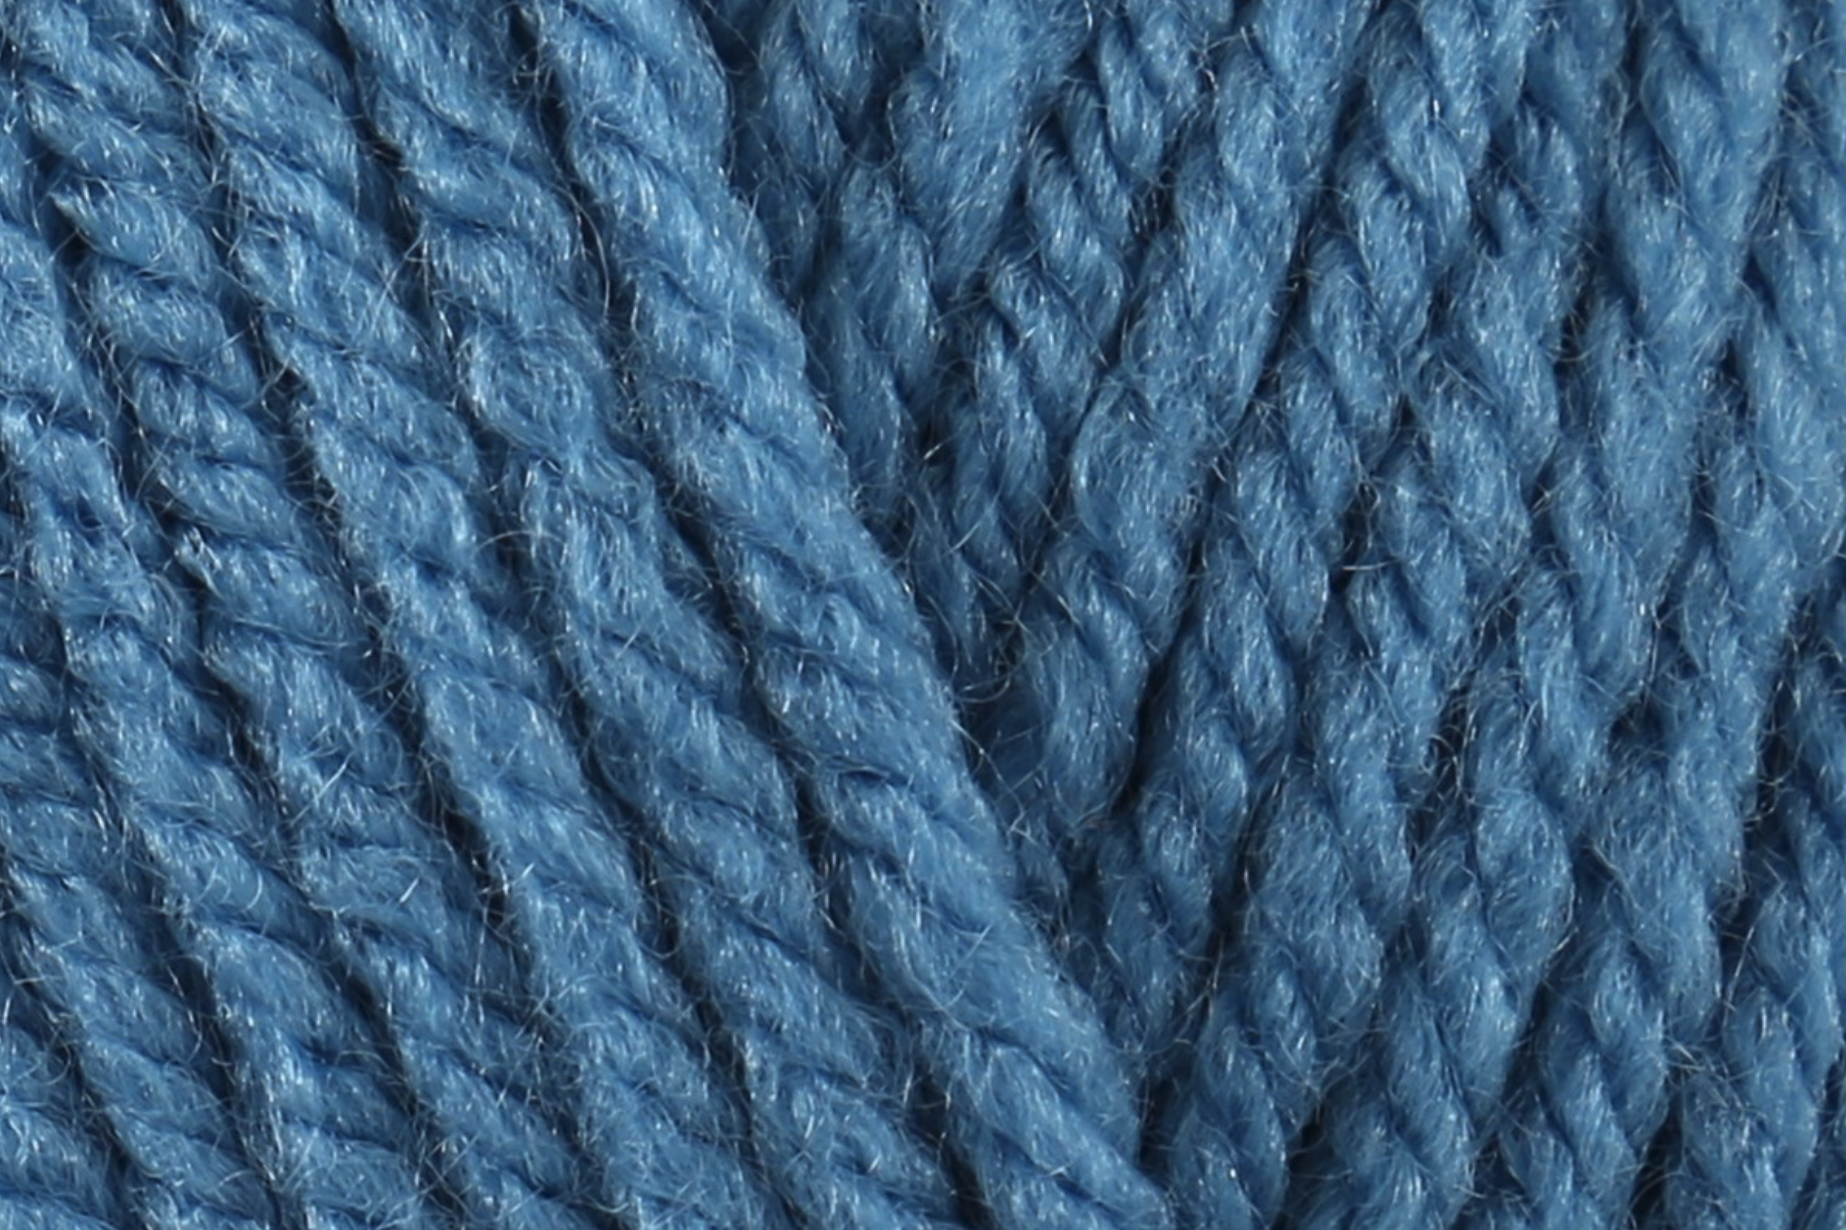 Stylecraft special aran in Cornish blue 1841